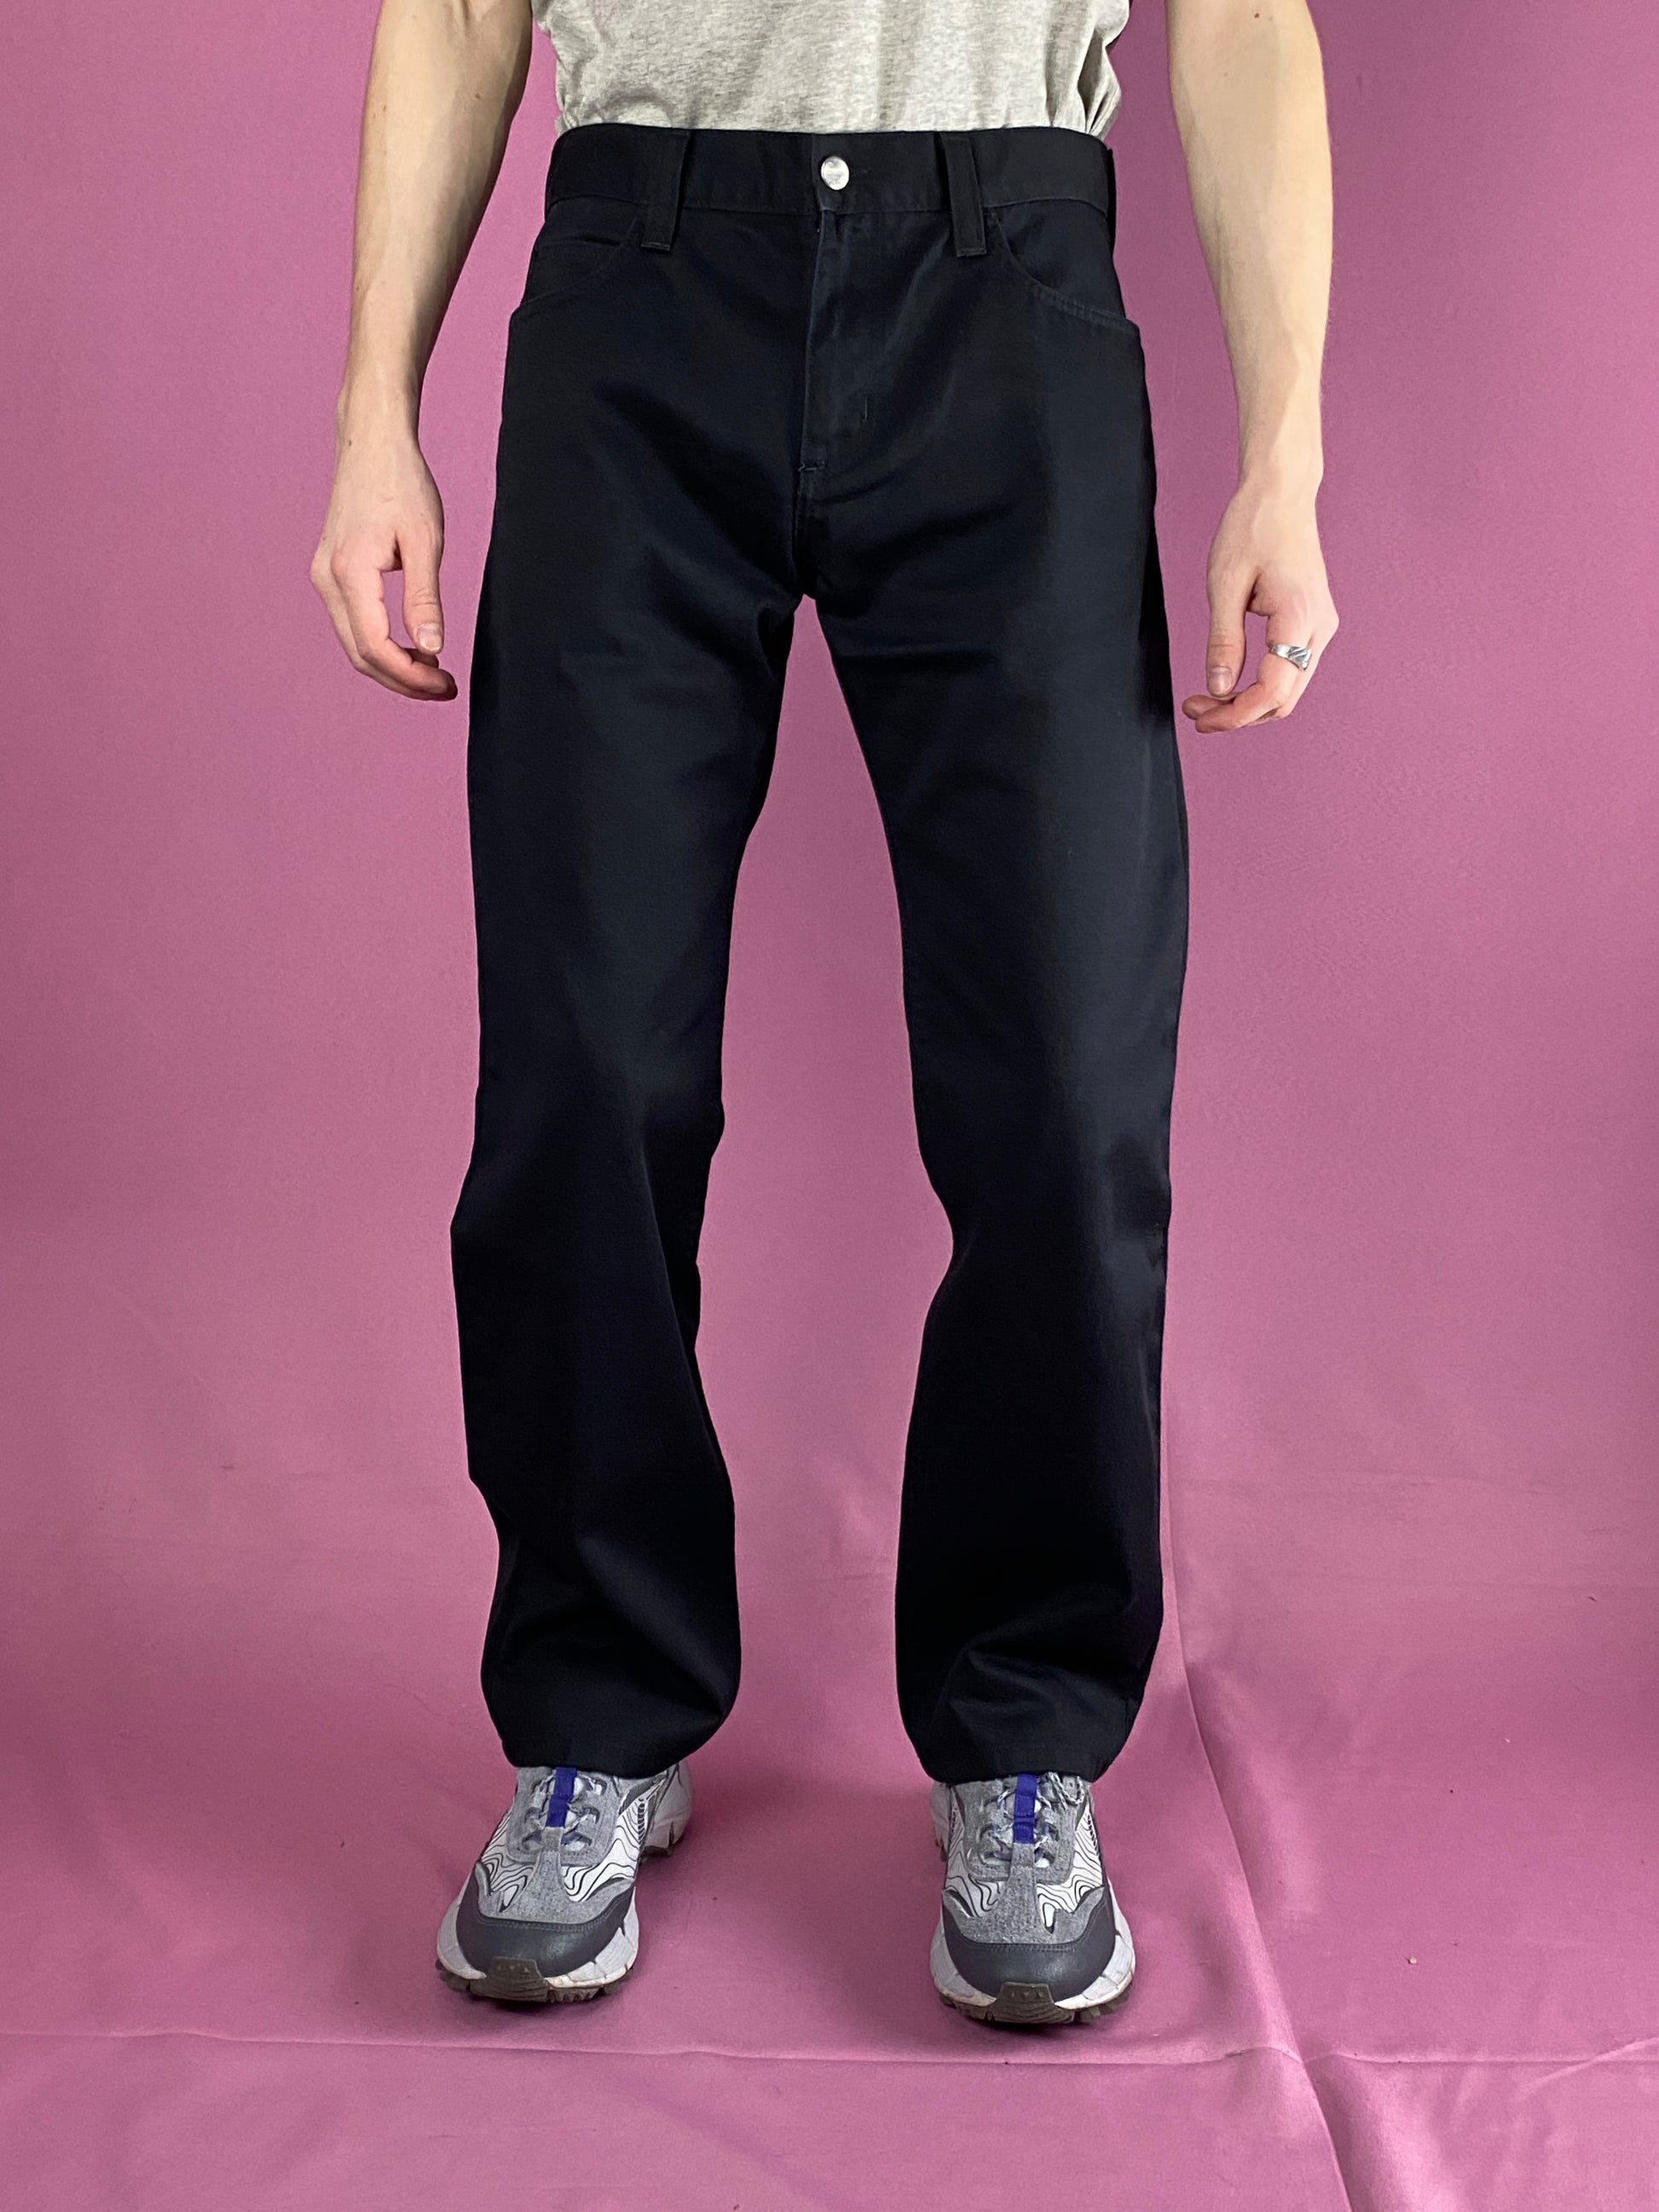 Carhartt Rockin Pant Vintage Men's Straight Pants - 31 Black Polyester Blend